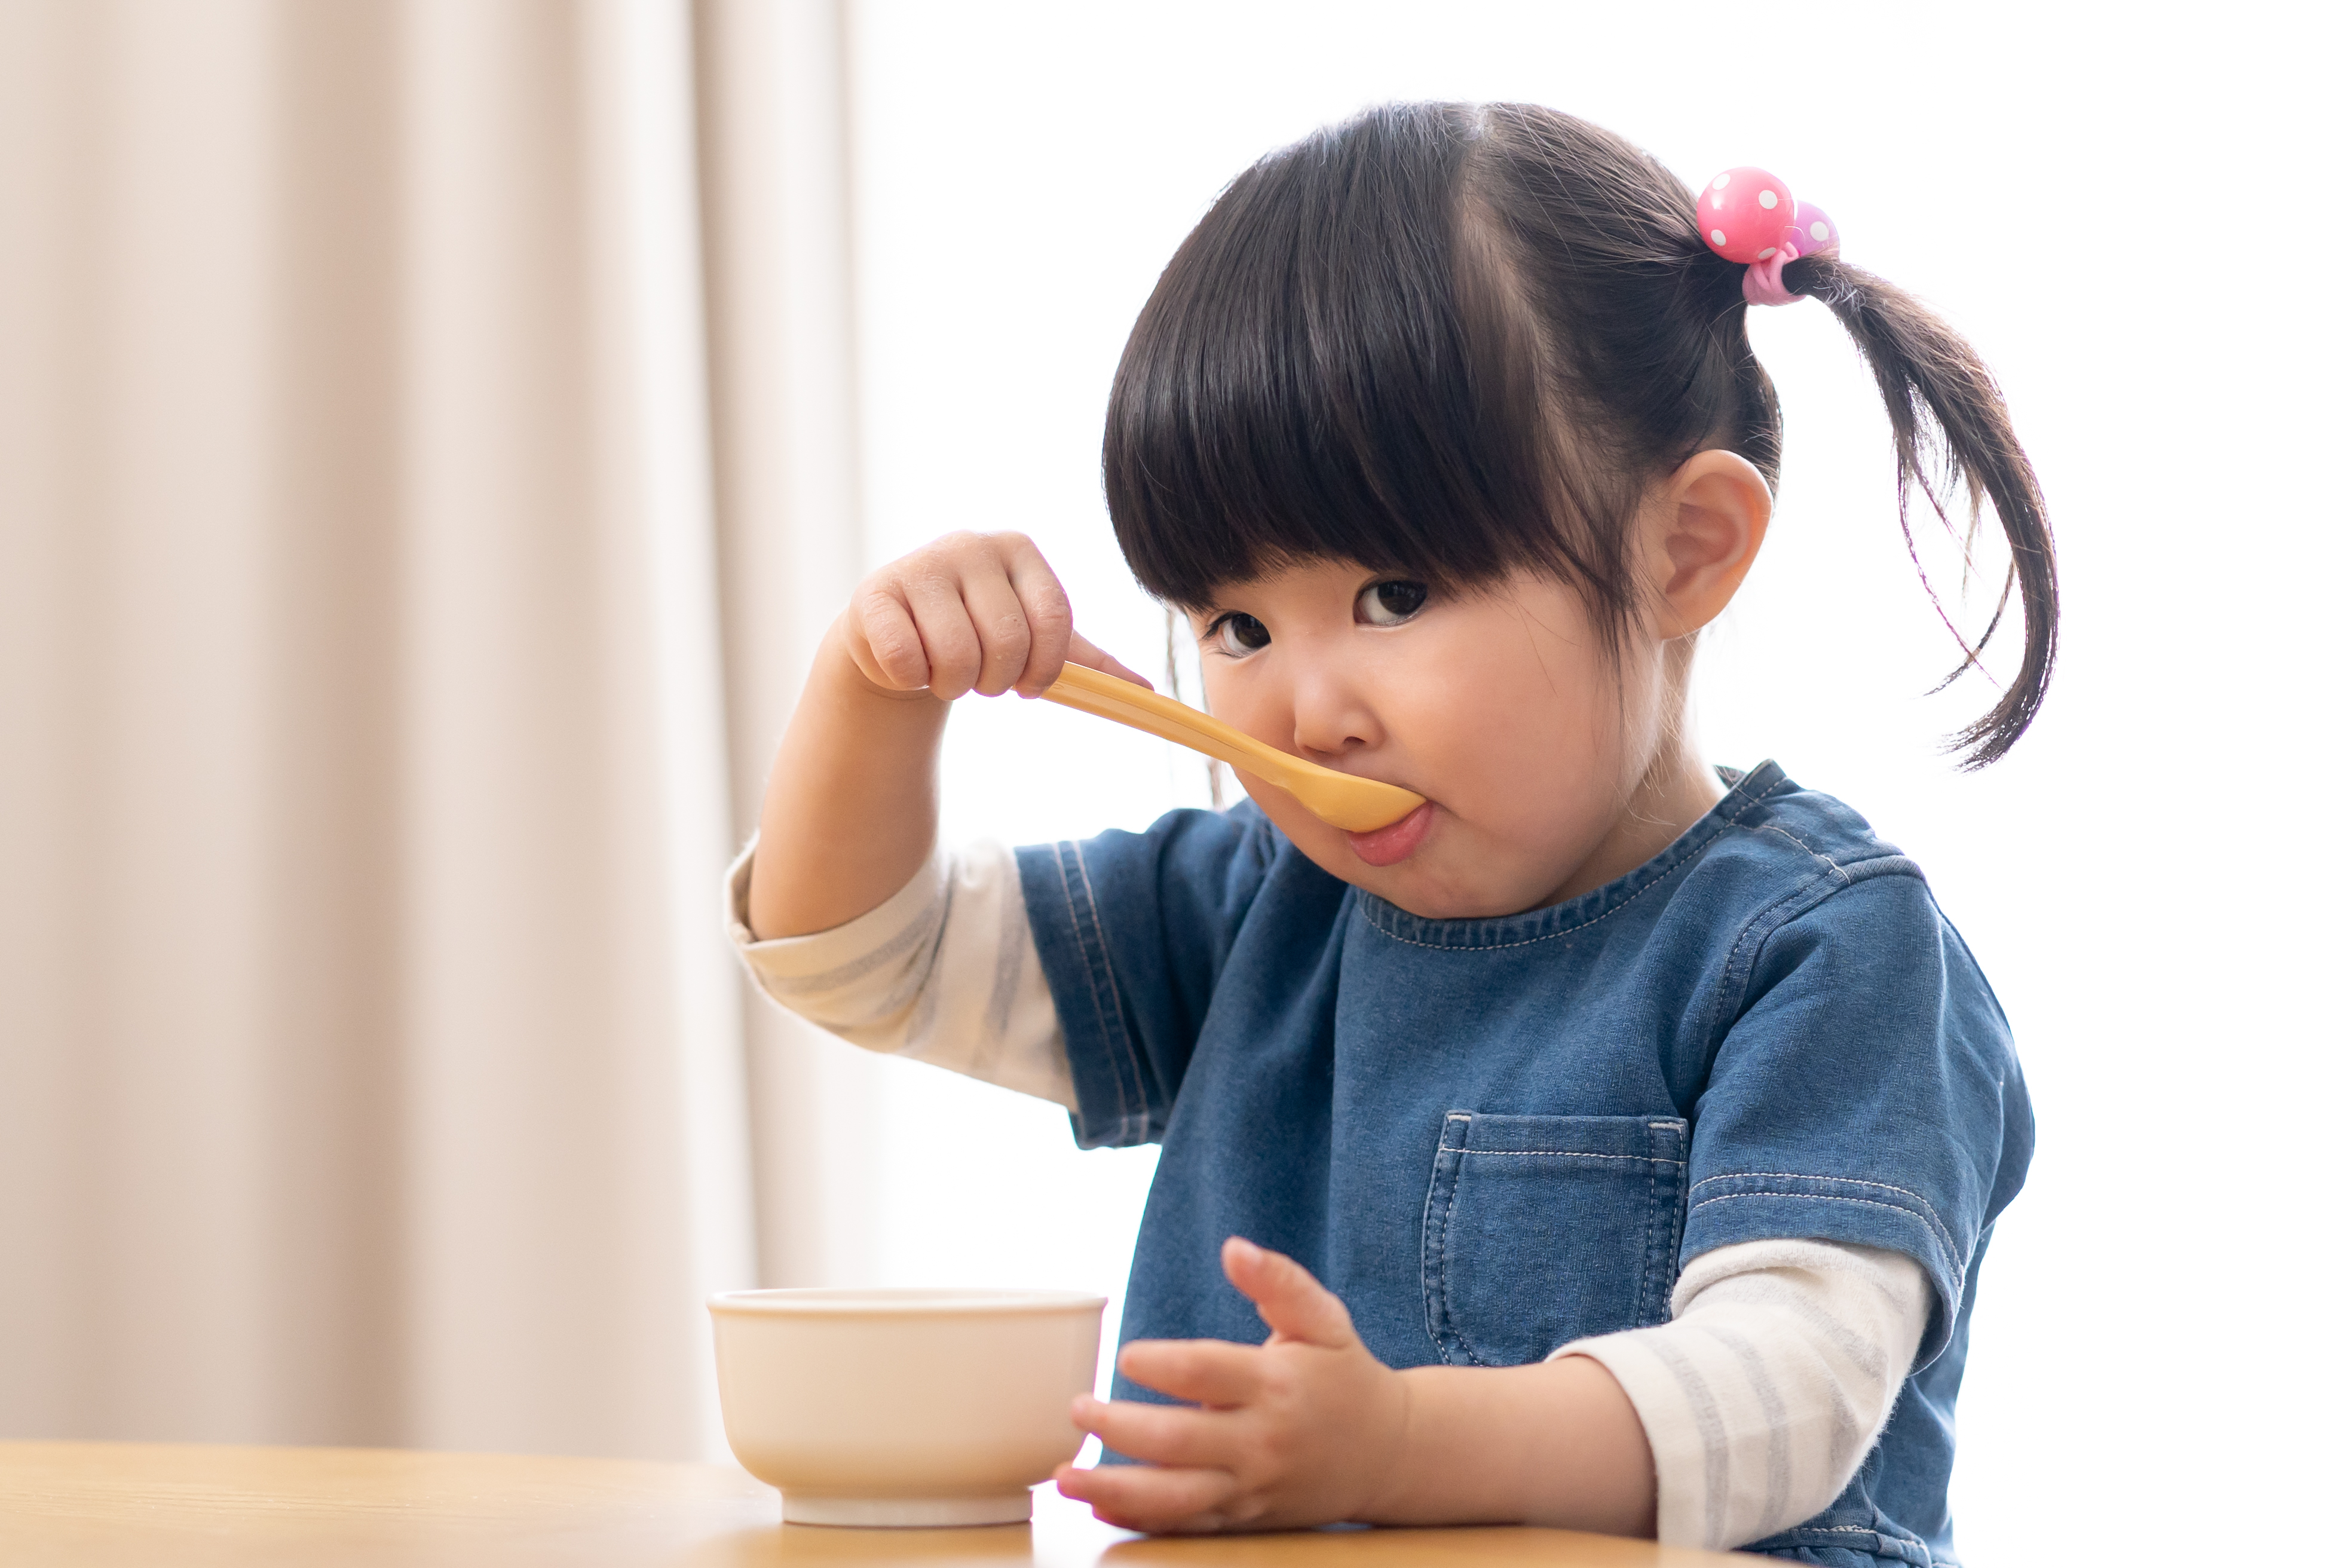 toddler lunchboxes: Toddler having Enfa milk and veggie sticks